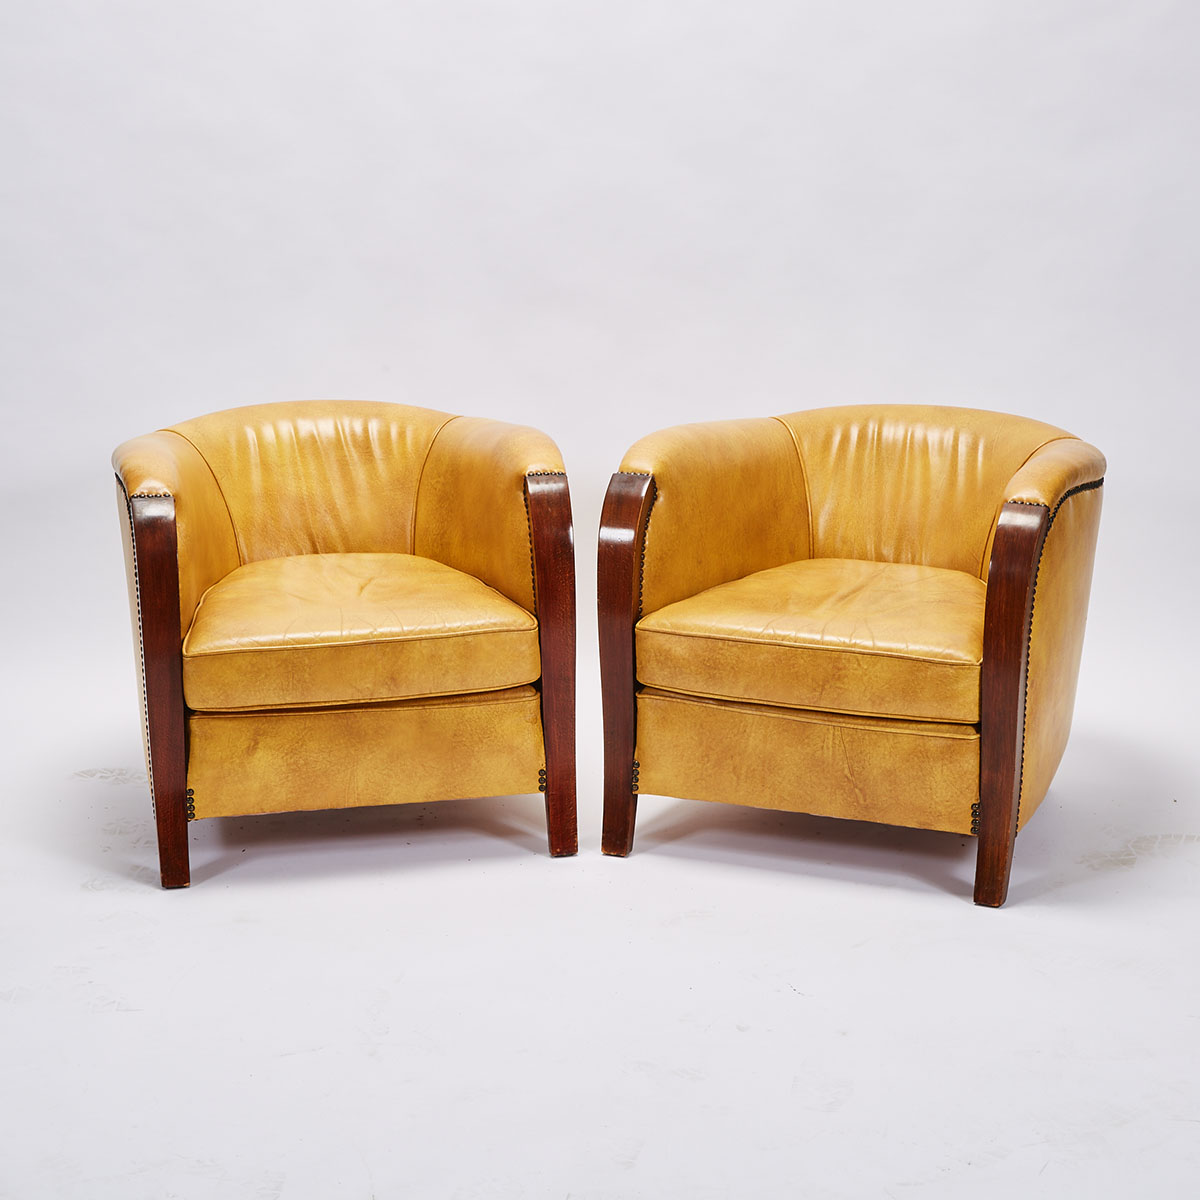 Pair of French Art Deco Mahogany Club Chairs, mid 20th century